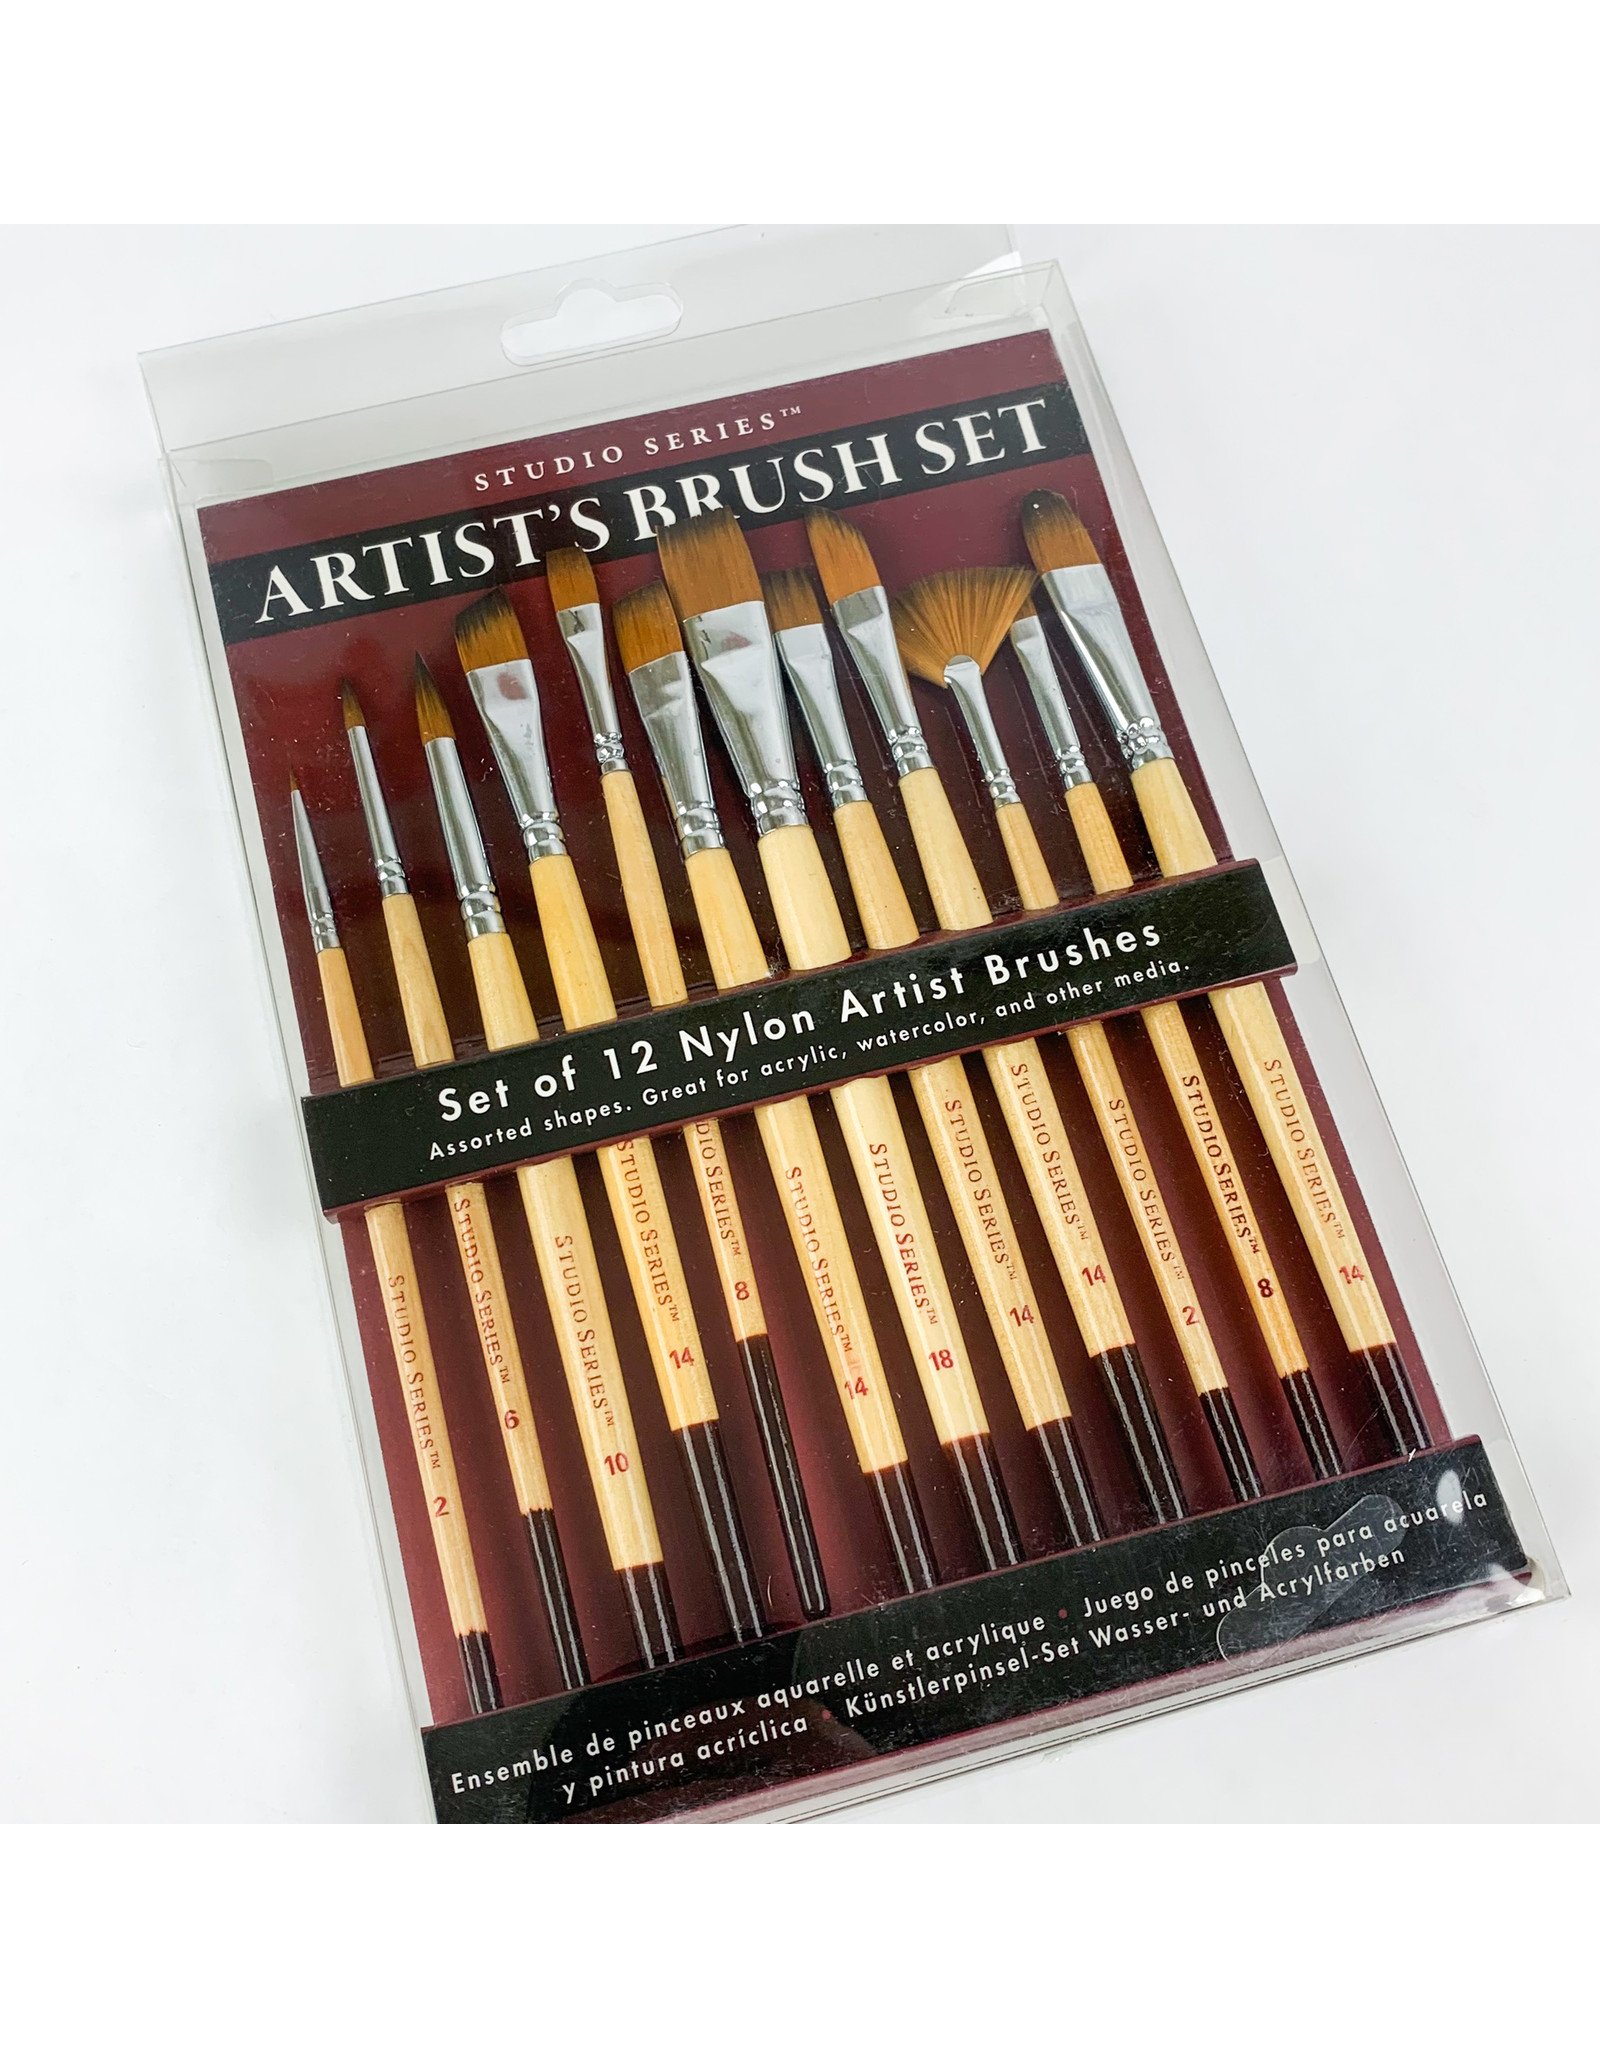 Studio Series Artist paintbrush set - CorAzoN